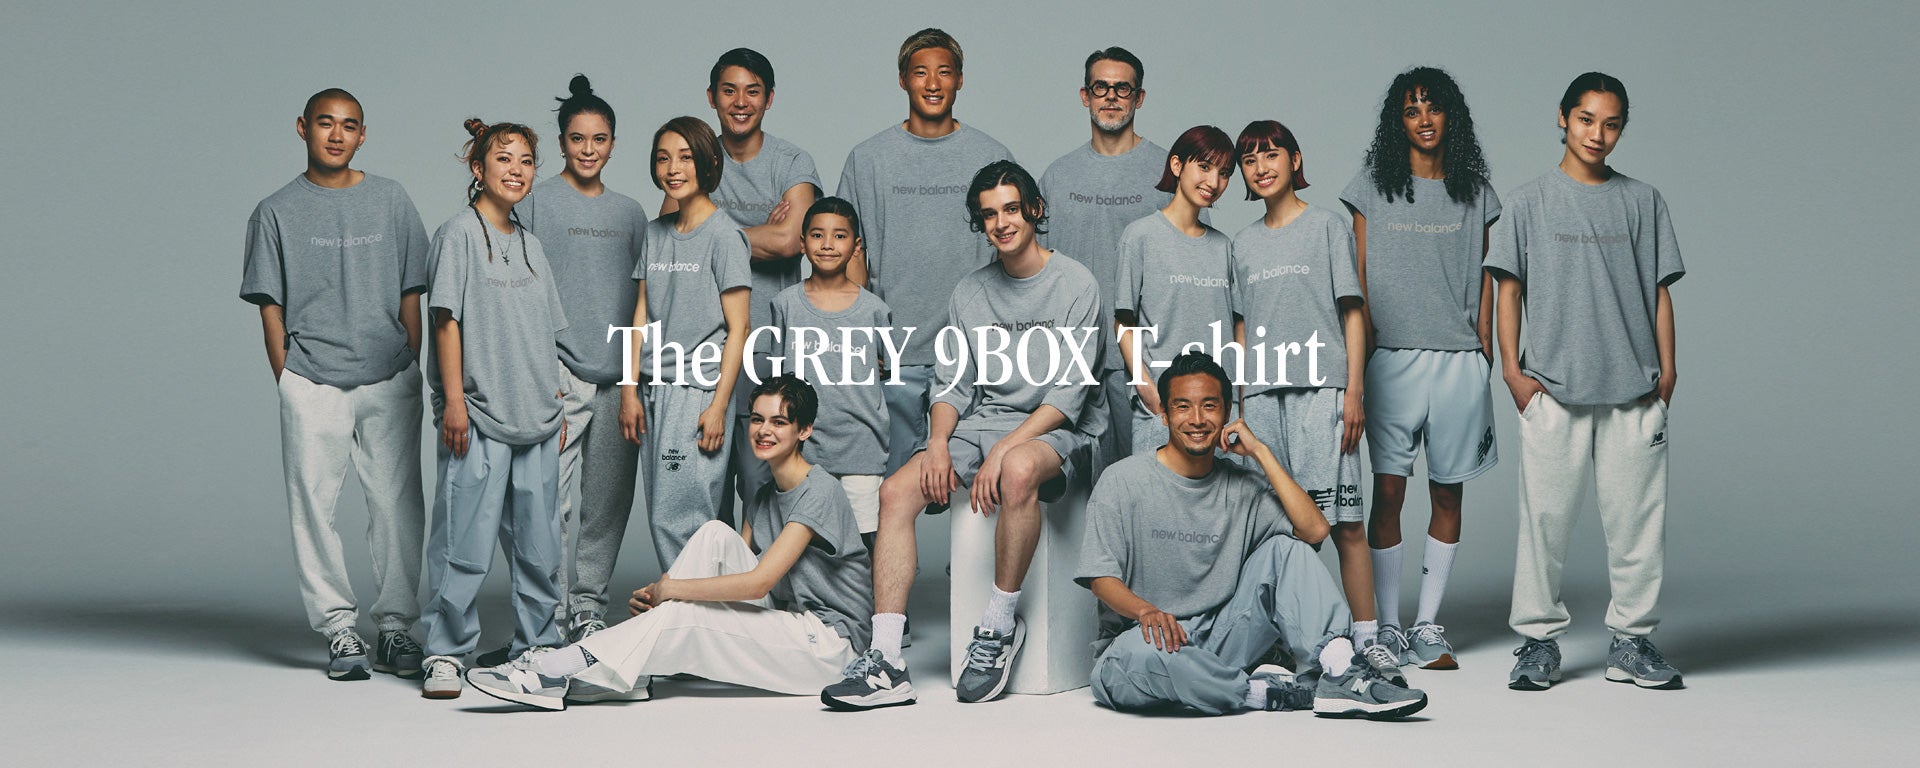 The GREY 9 BOX T-shirt